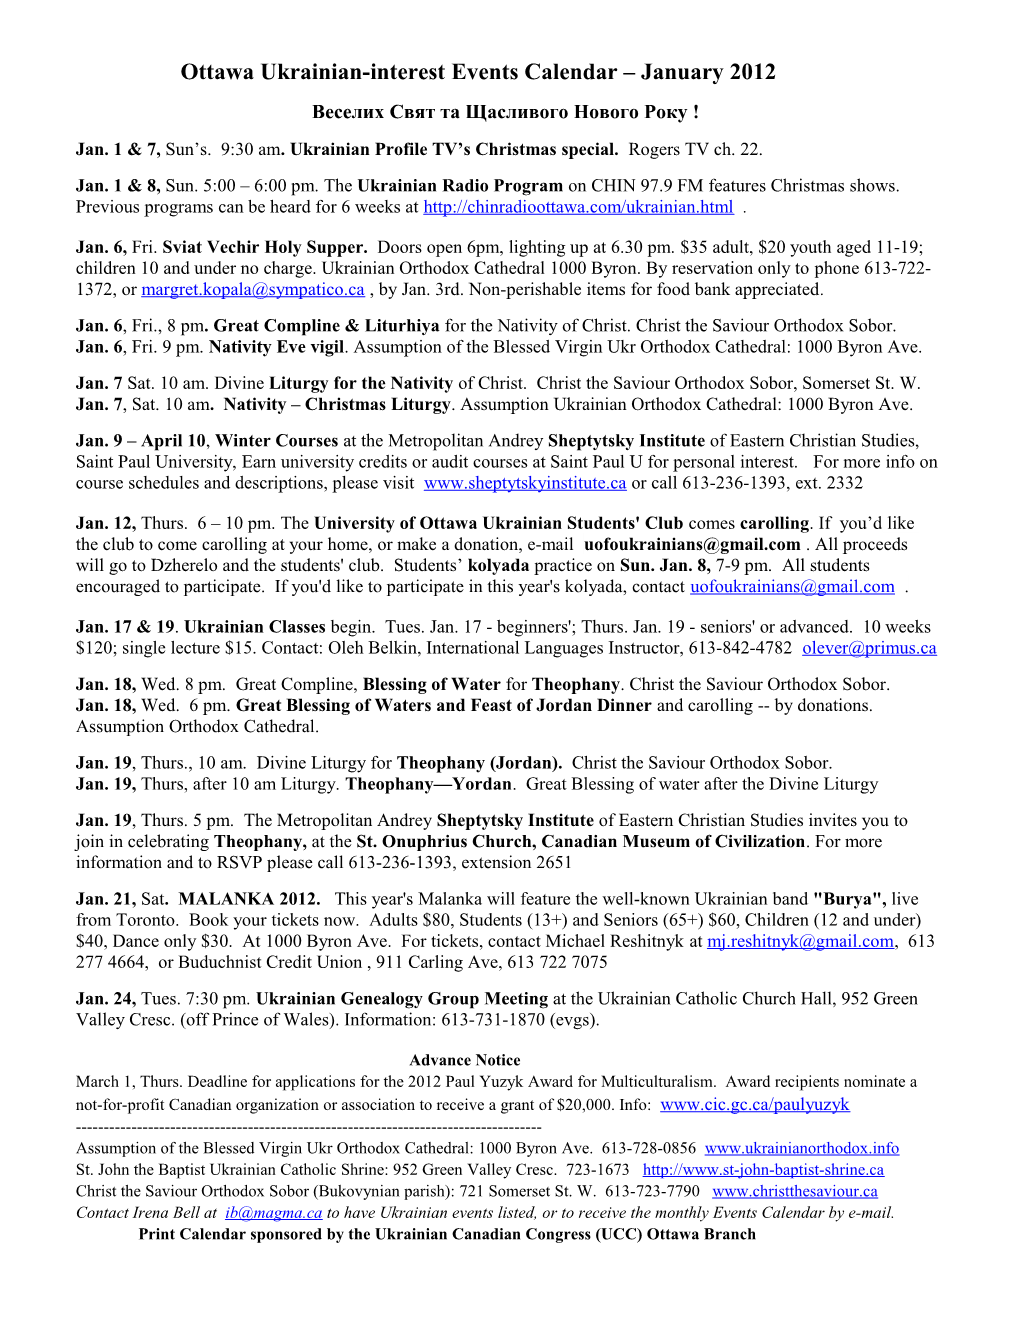 Ottawa Ukrainian-Interest Events Calendar - April 2007